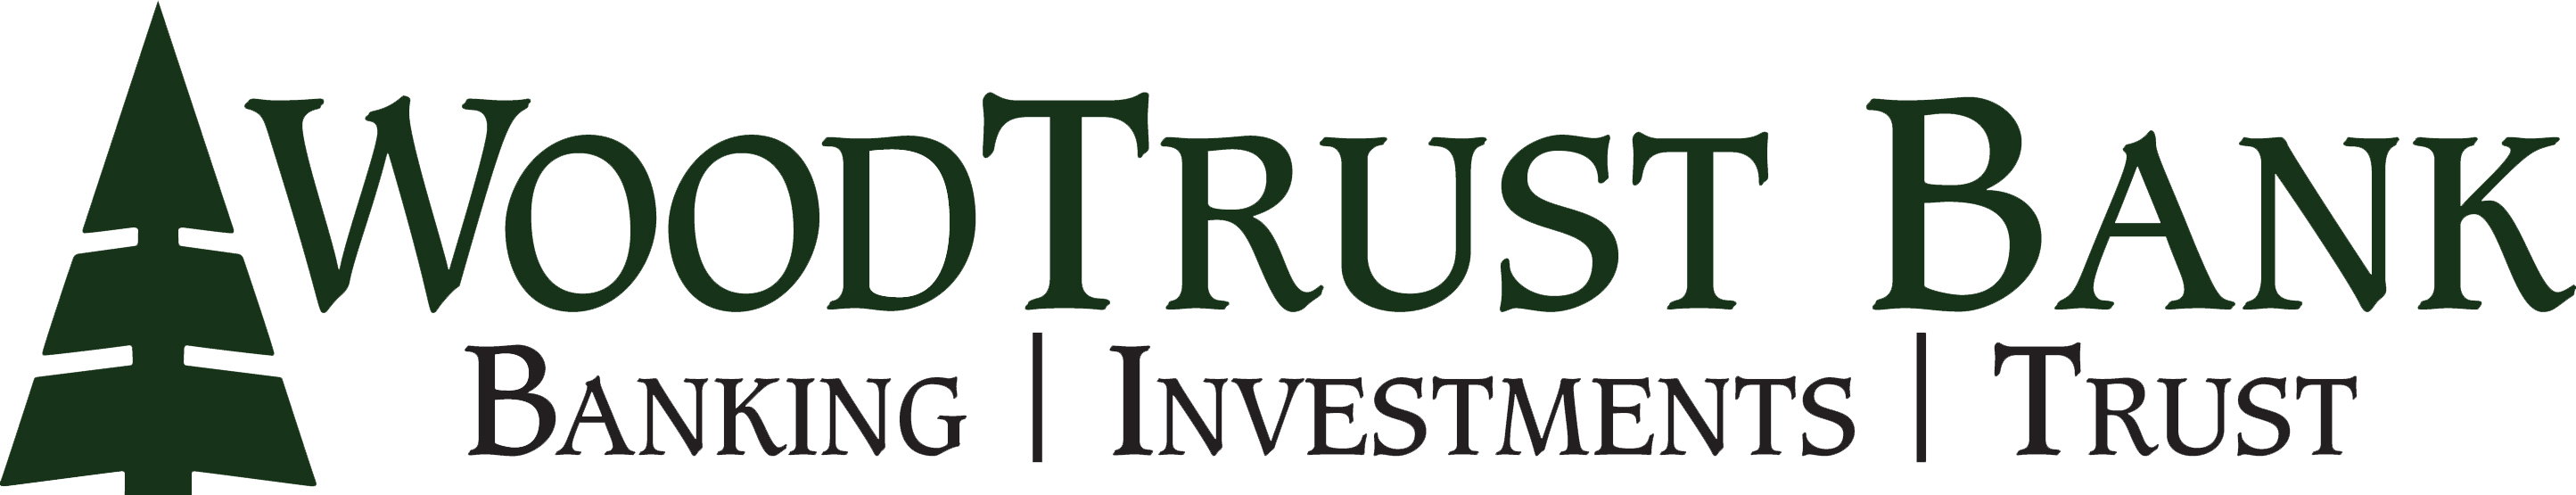 Wood Trust Bank Logo